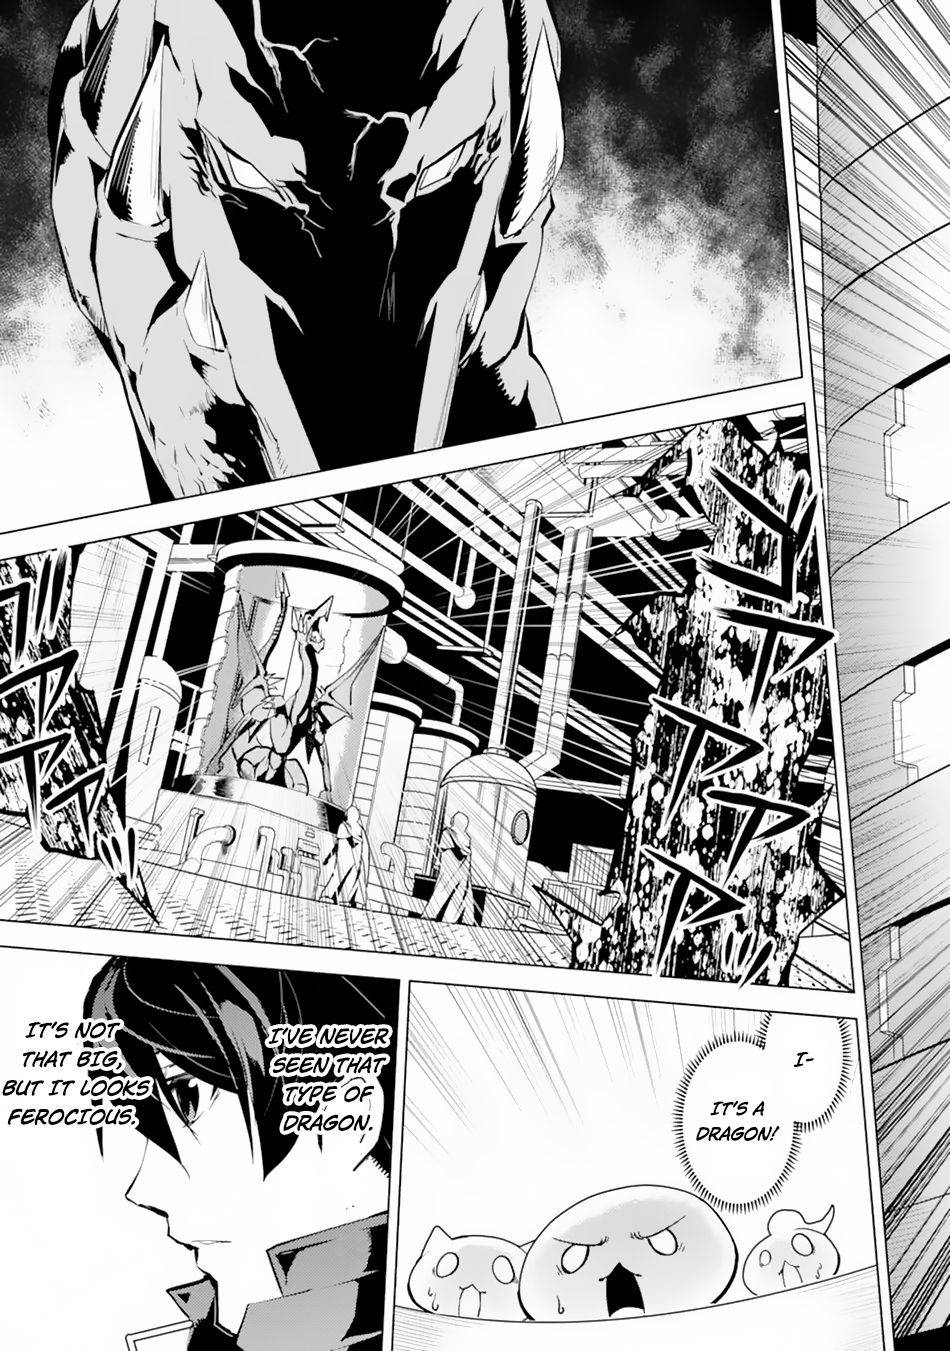 Manga Mogura RE on X: My Isekai Life: I Gained a Second Character Class &  Became the Strongest Sage in the World LN manga adaptation vol 18 by  Shinkou Shotou, Ponjea (Friendly